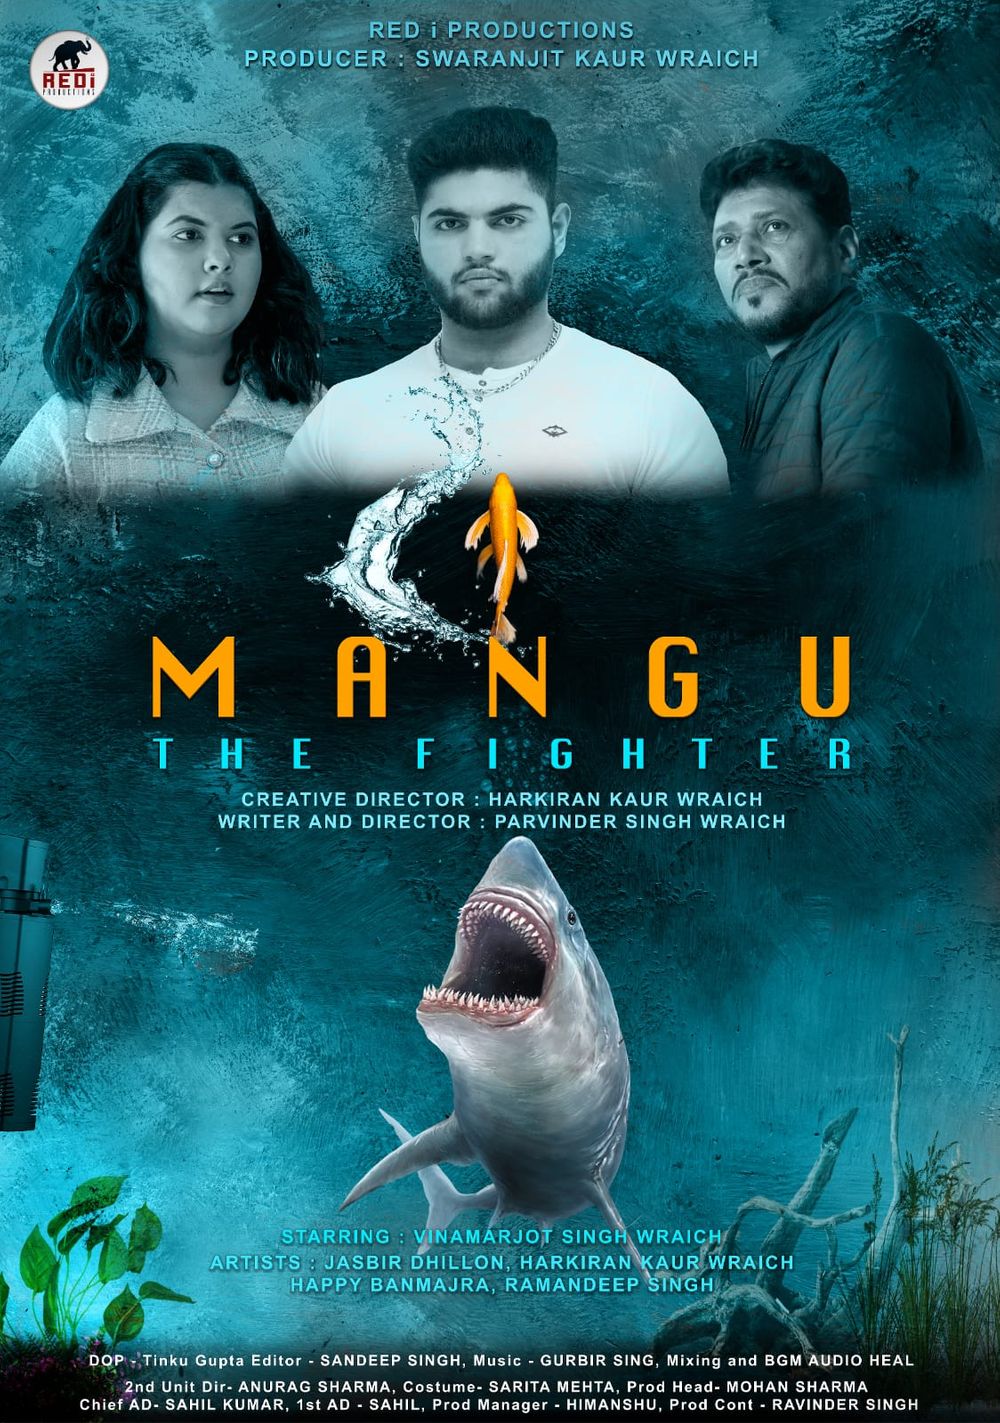 Mangu The Fighter Movie Review